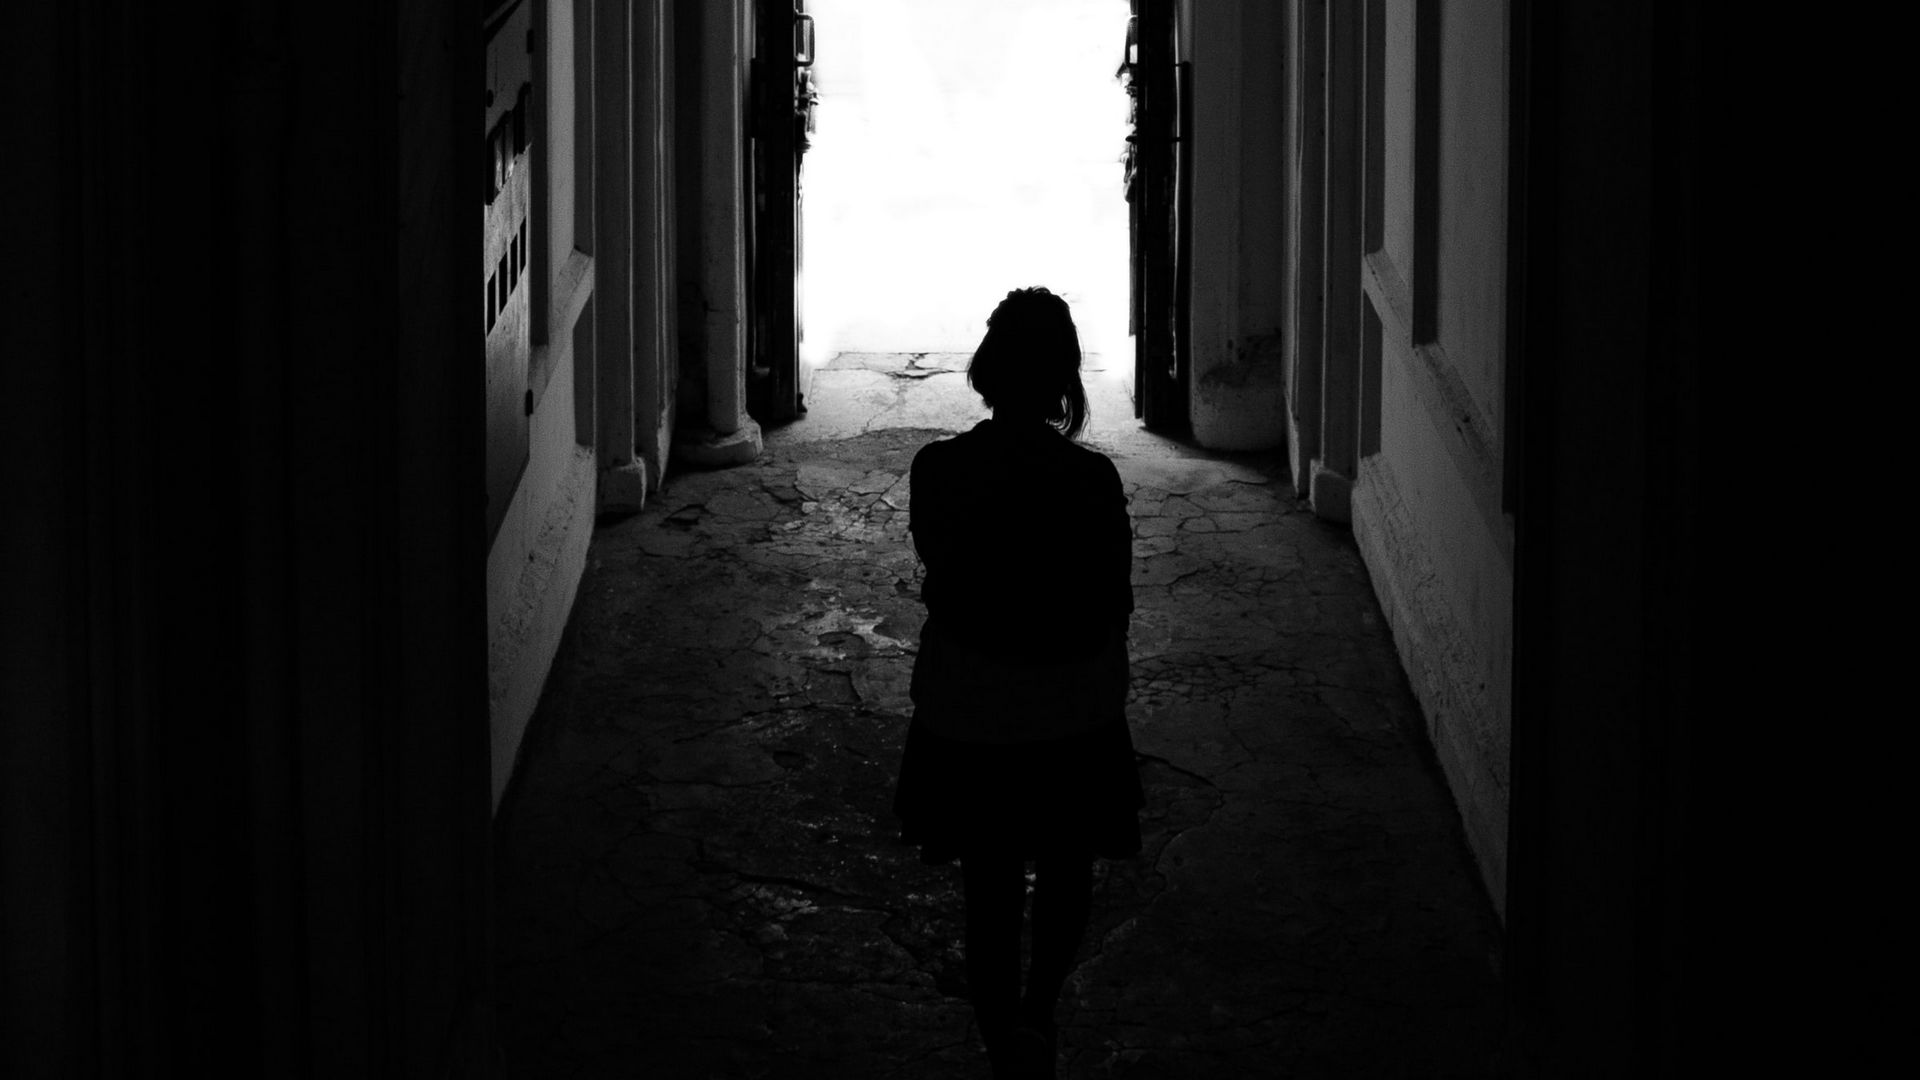 Download wallpaper 1920x1080 loneliness, alone, girl, silhouette, dark,  black full hd, hdtv, fhd, 1080p hd background